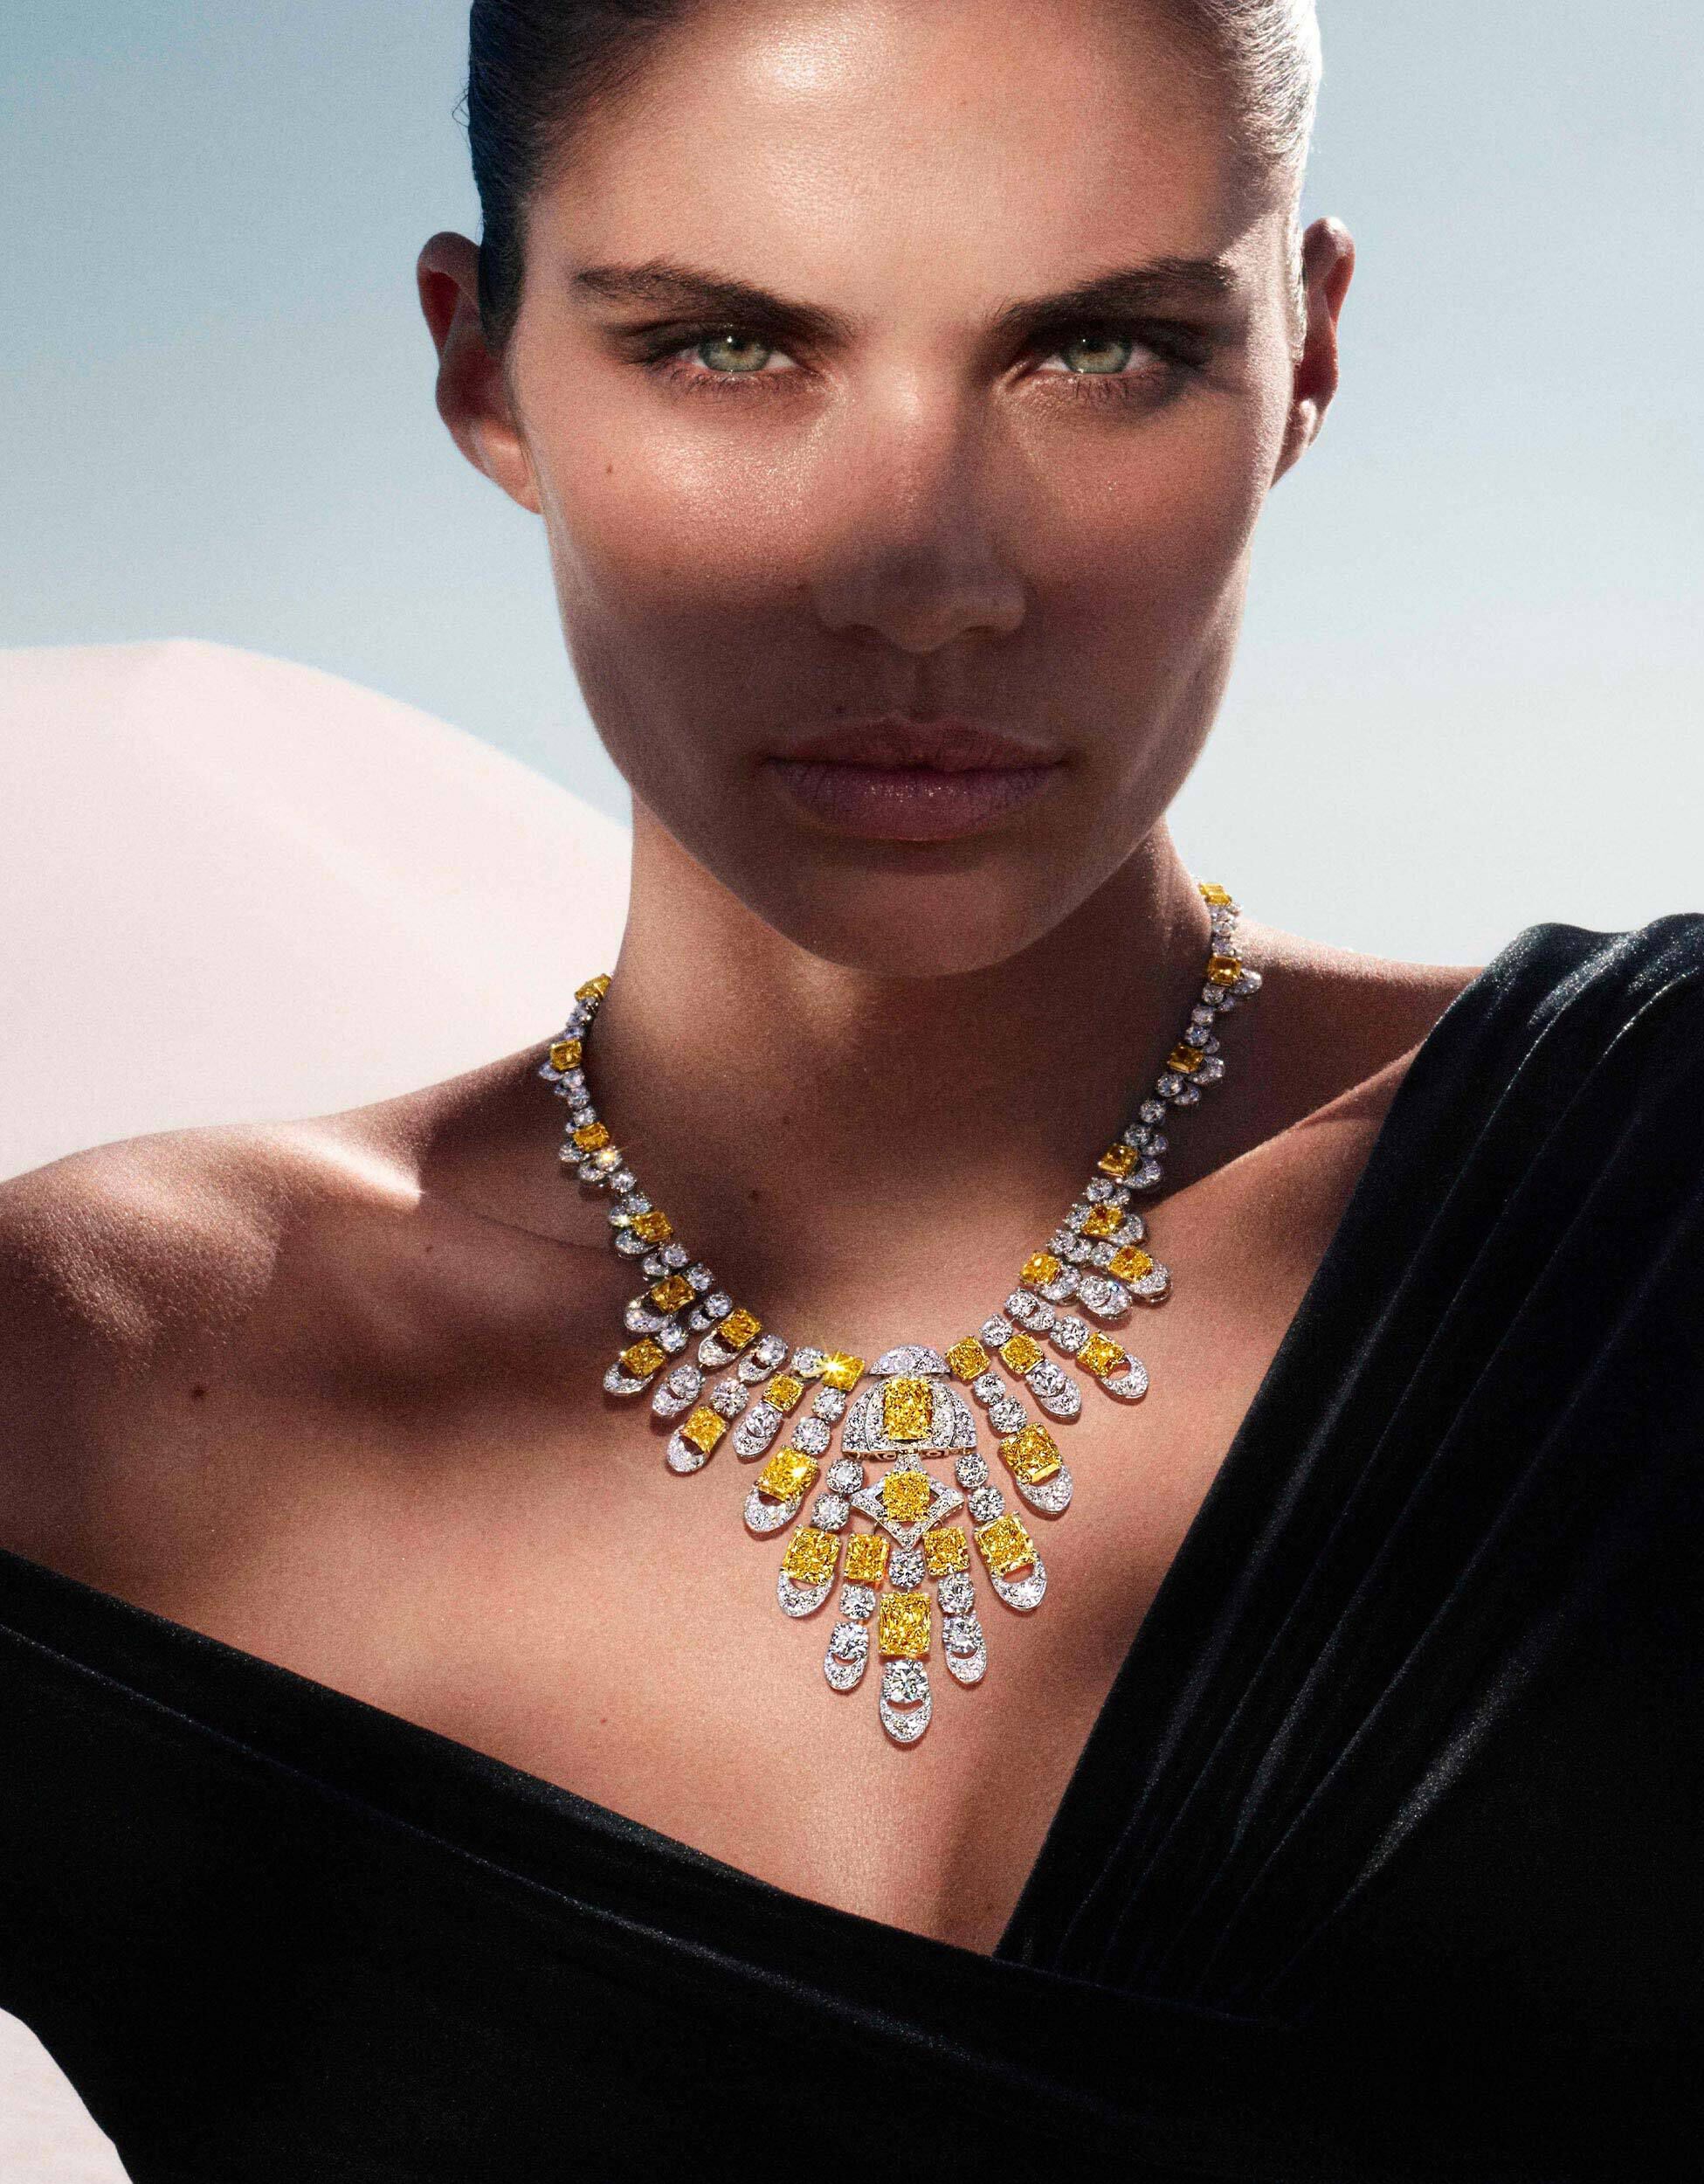 Sara Sampaio wears Graff Night Moon yellow and white diamond necklace, in a desert